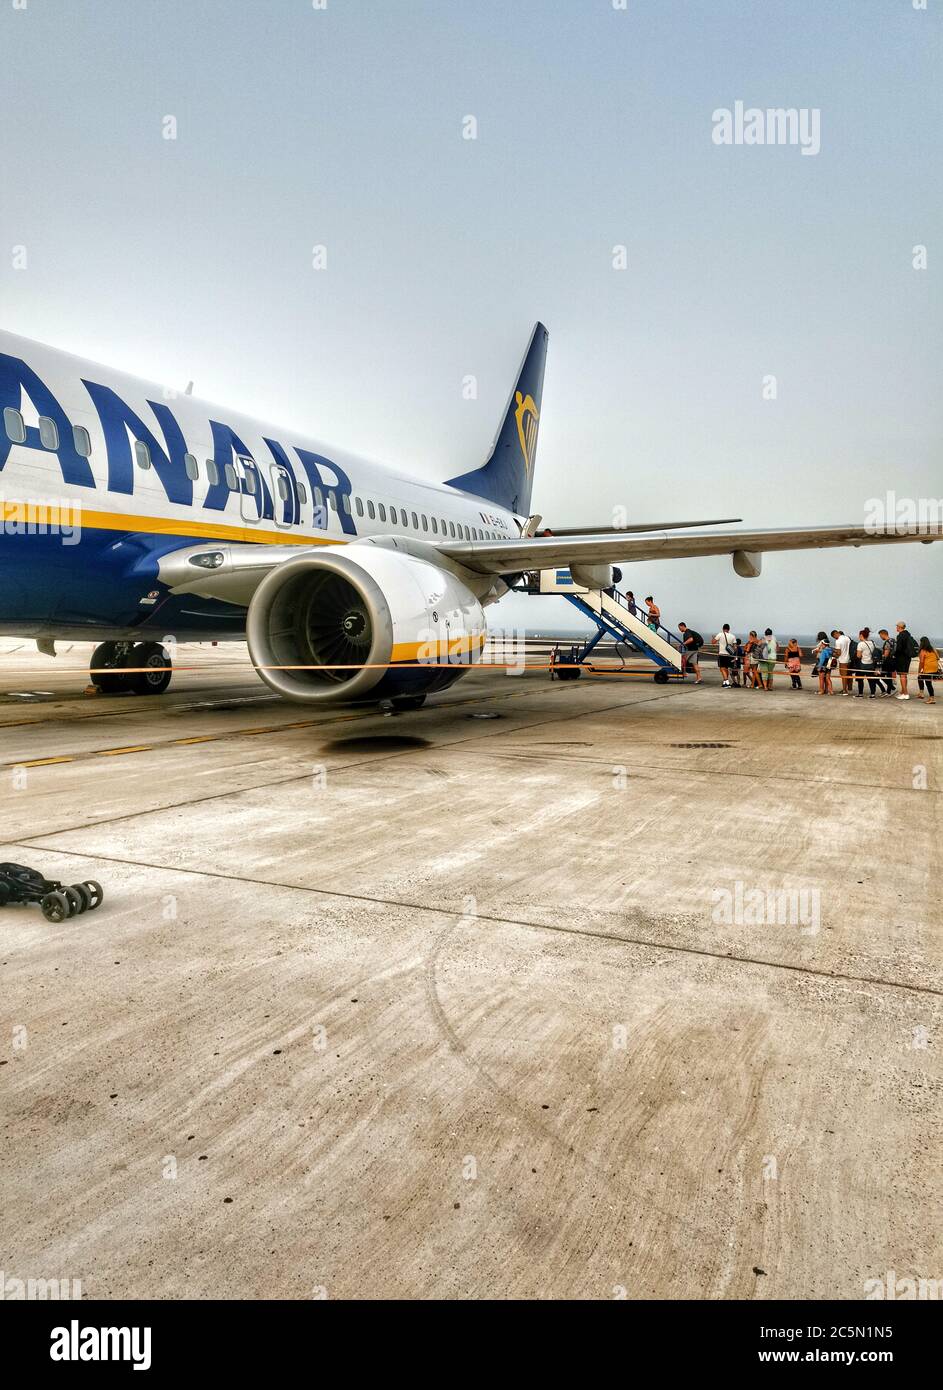 Fuerteventura, Canary Islands - July 25, 2019: Passengers boarding on Ryanair airplane from Fuerteventura International Airport, Canary Islands. Stock Photo